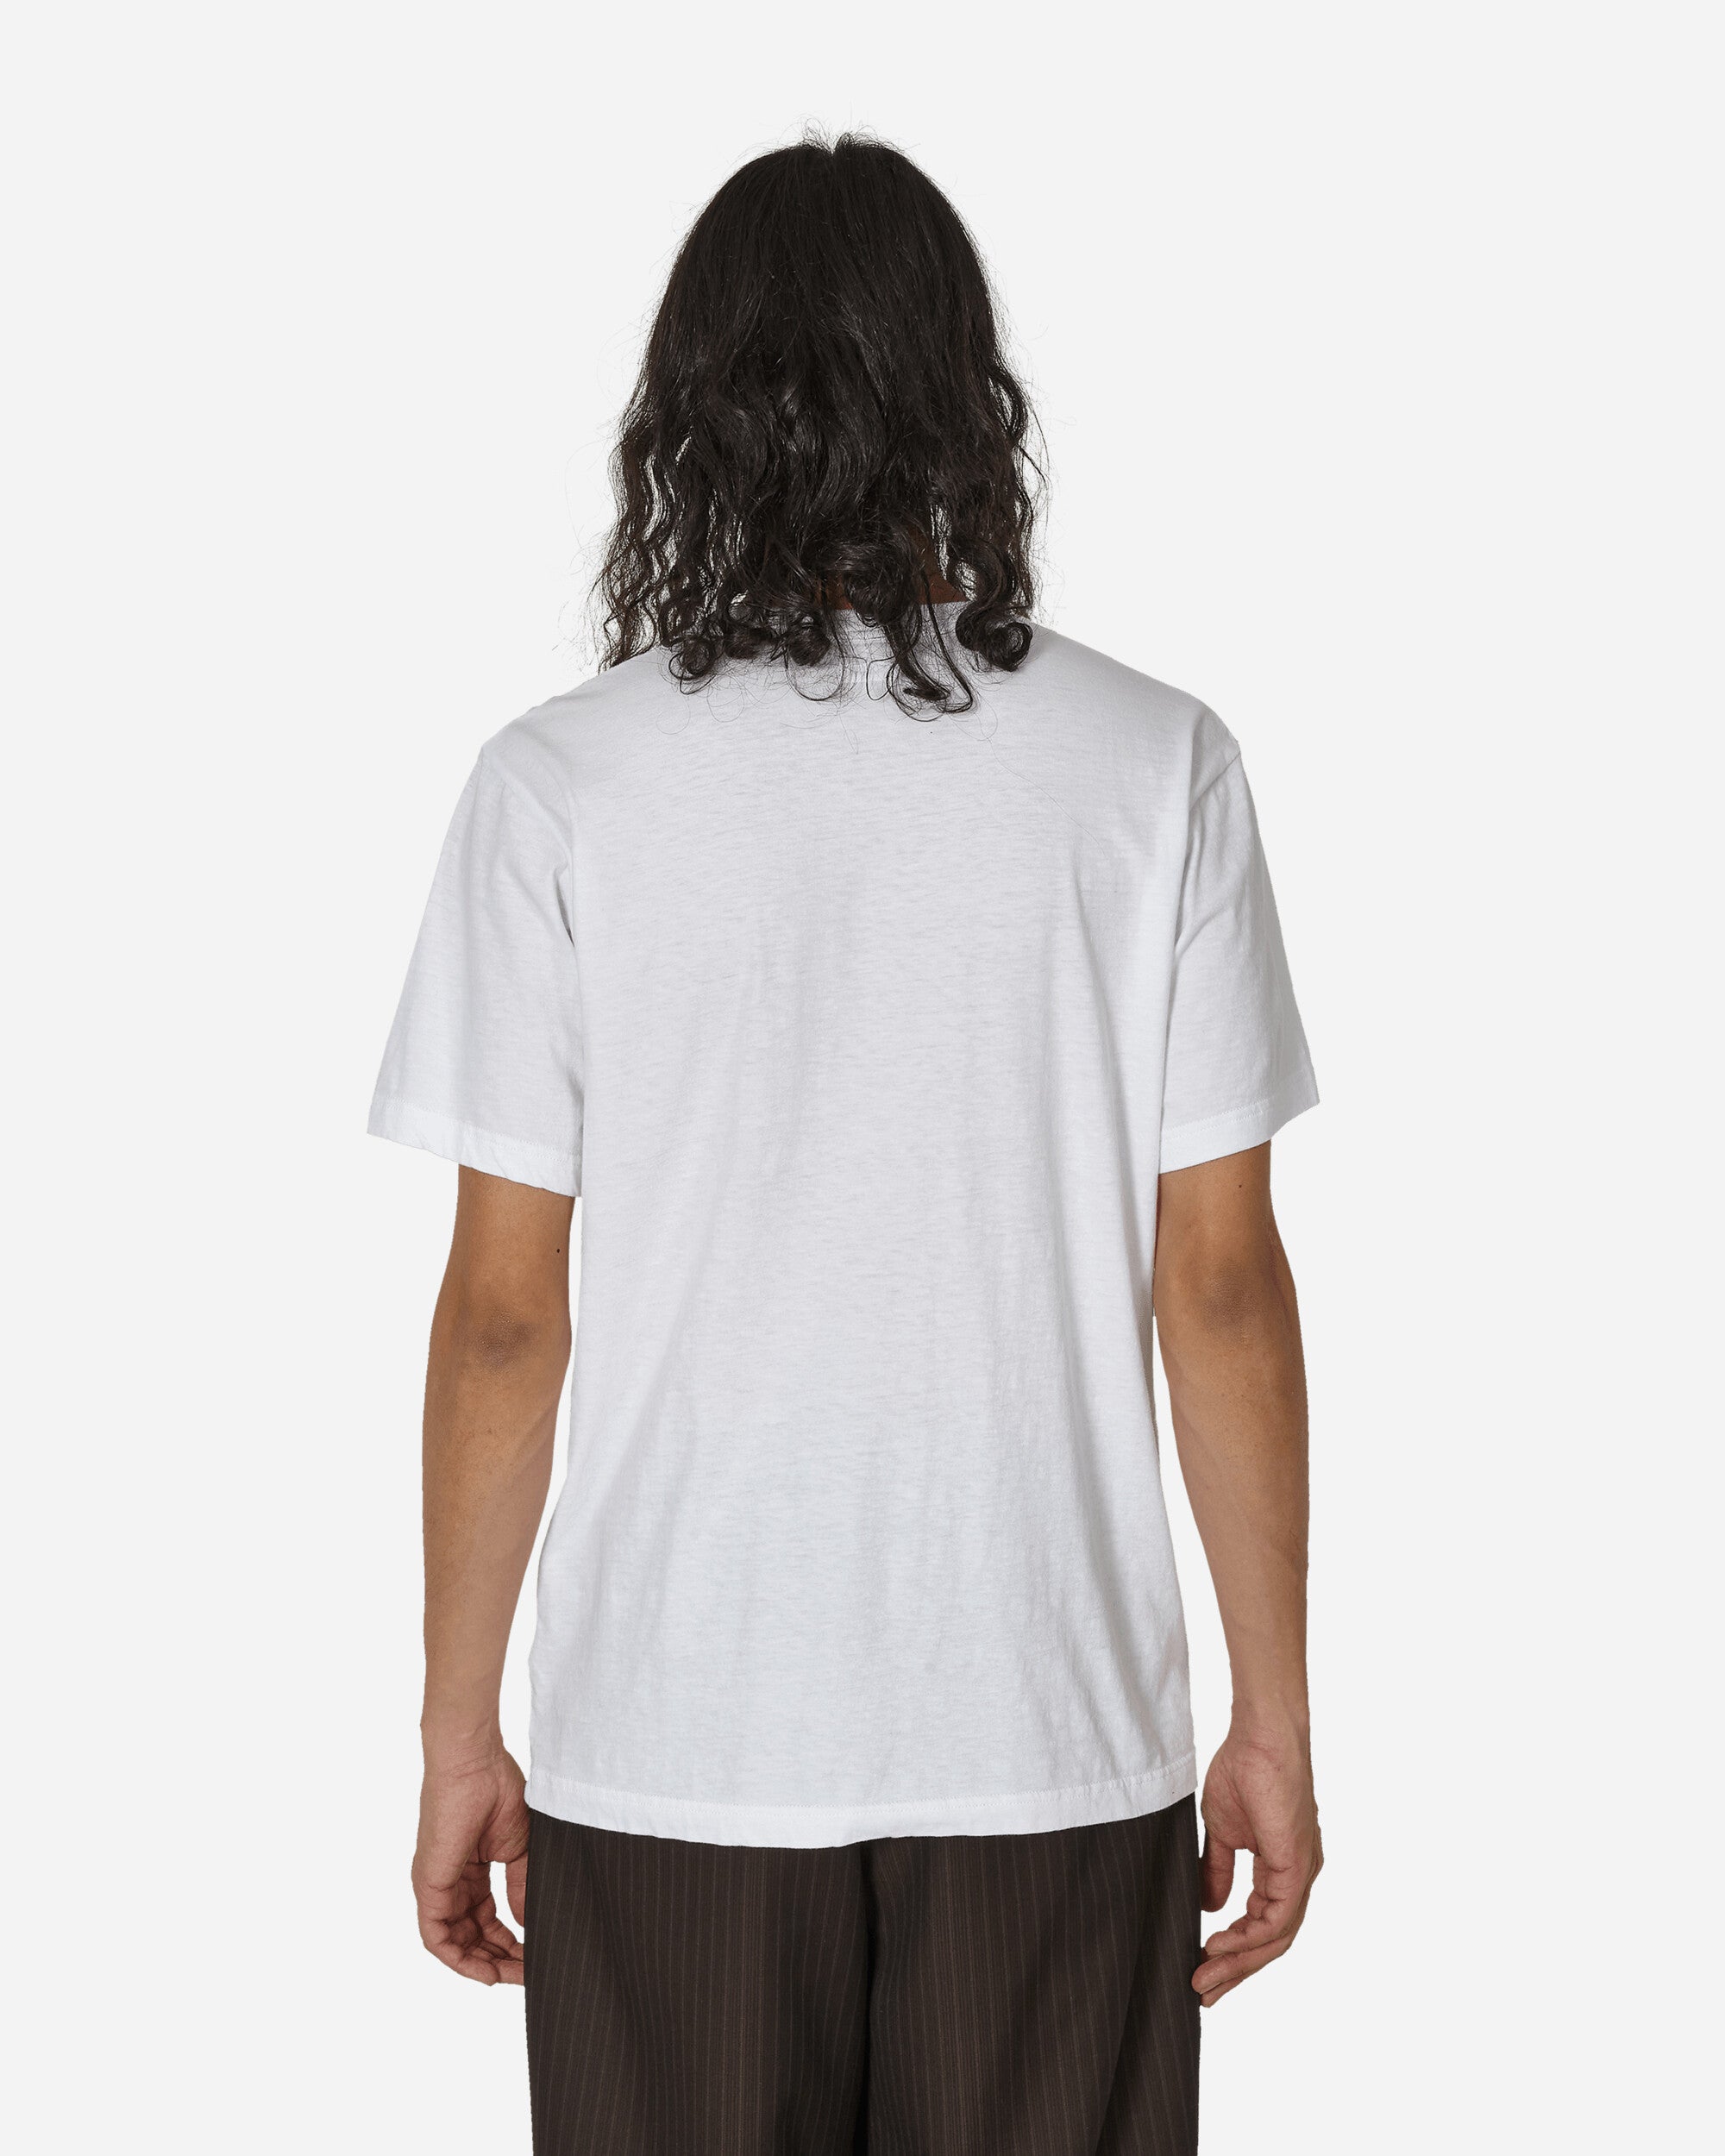 visvim Sublig Wide 3-Pack S/S White T-Shirts Shortsleeve 124105009002 001